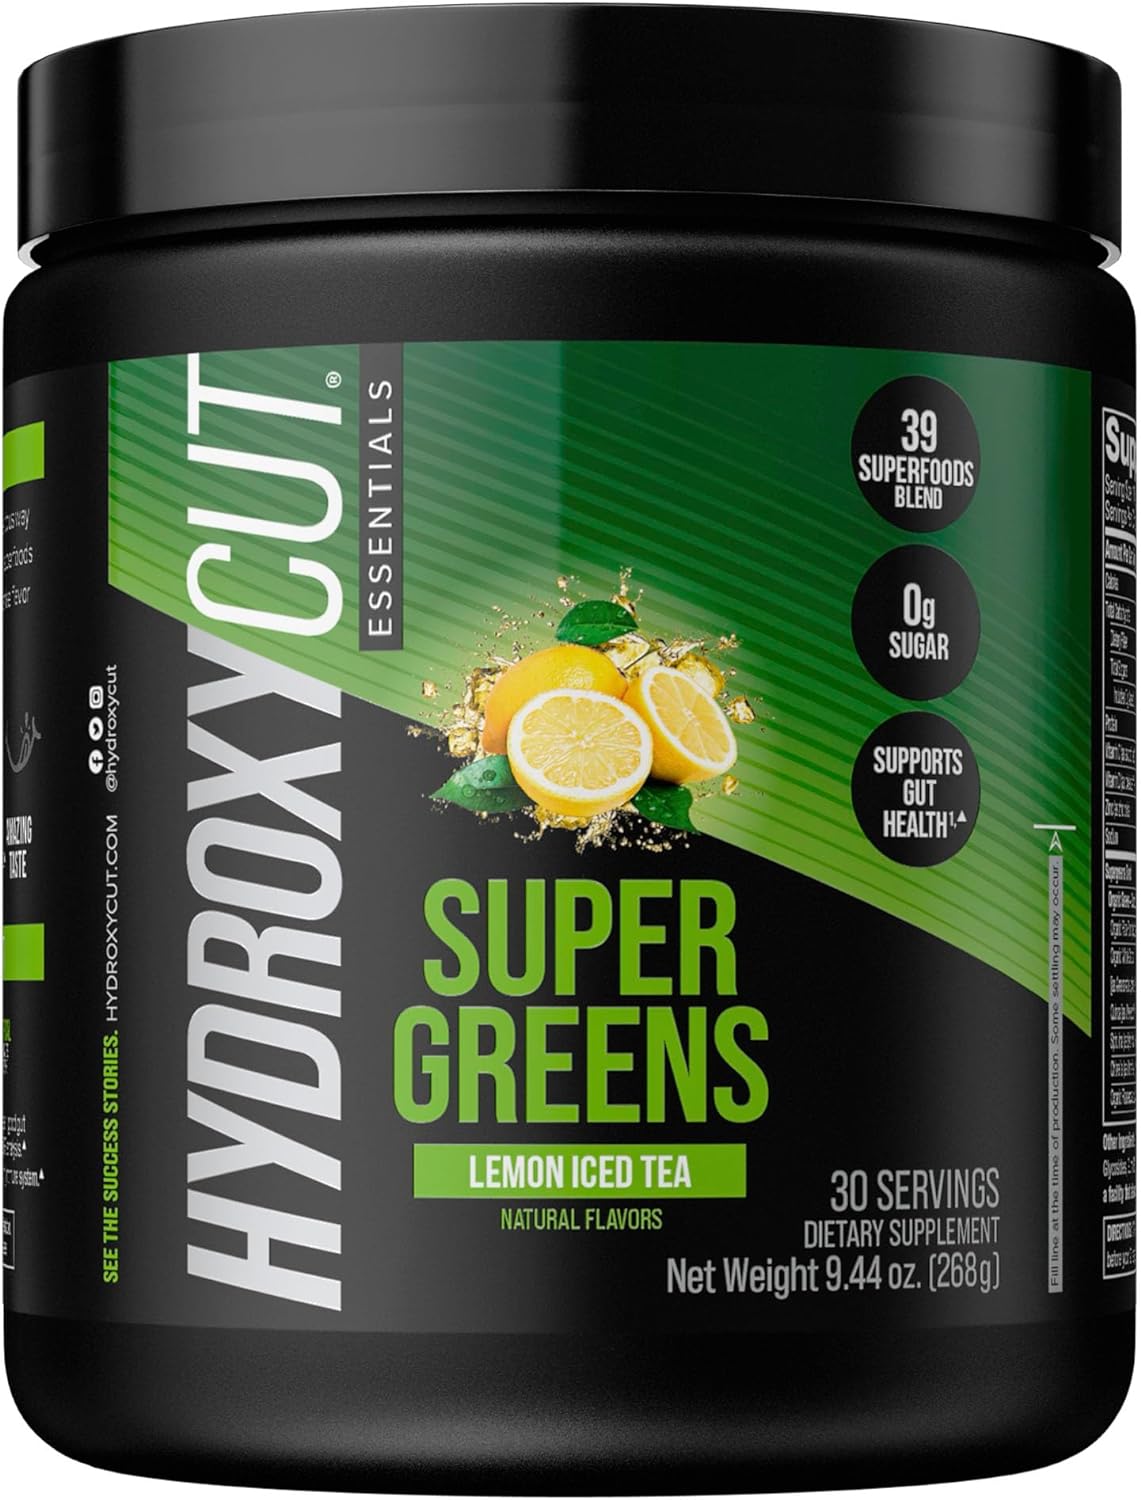 Hydroxycut Essentials Super Greens | 39 Superfoods Blend, Fruits, Vegg